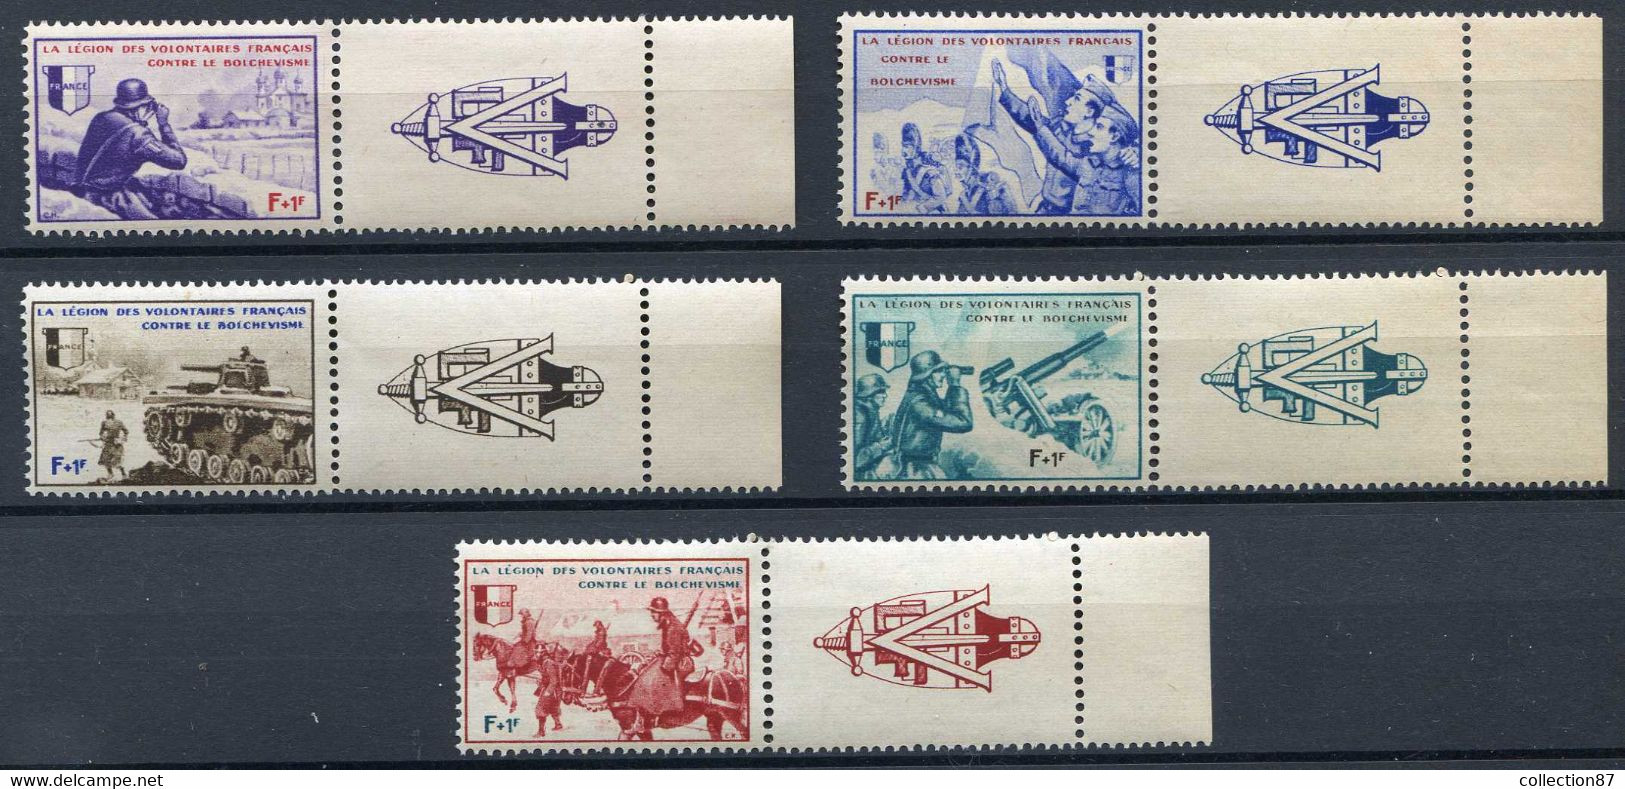 L.V.F Avec VIGNETTE > Yvert N° 6 à 10  < Série Borodino Neuf Luxe - MNH  Cat 40 € -- CHAR TANK - CANON - REF 1672 608397 - War Stamps